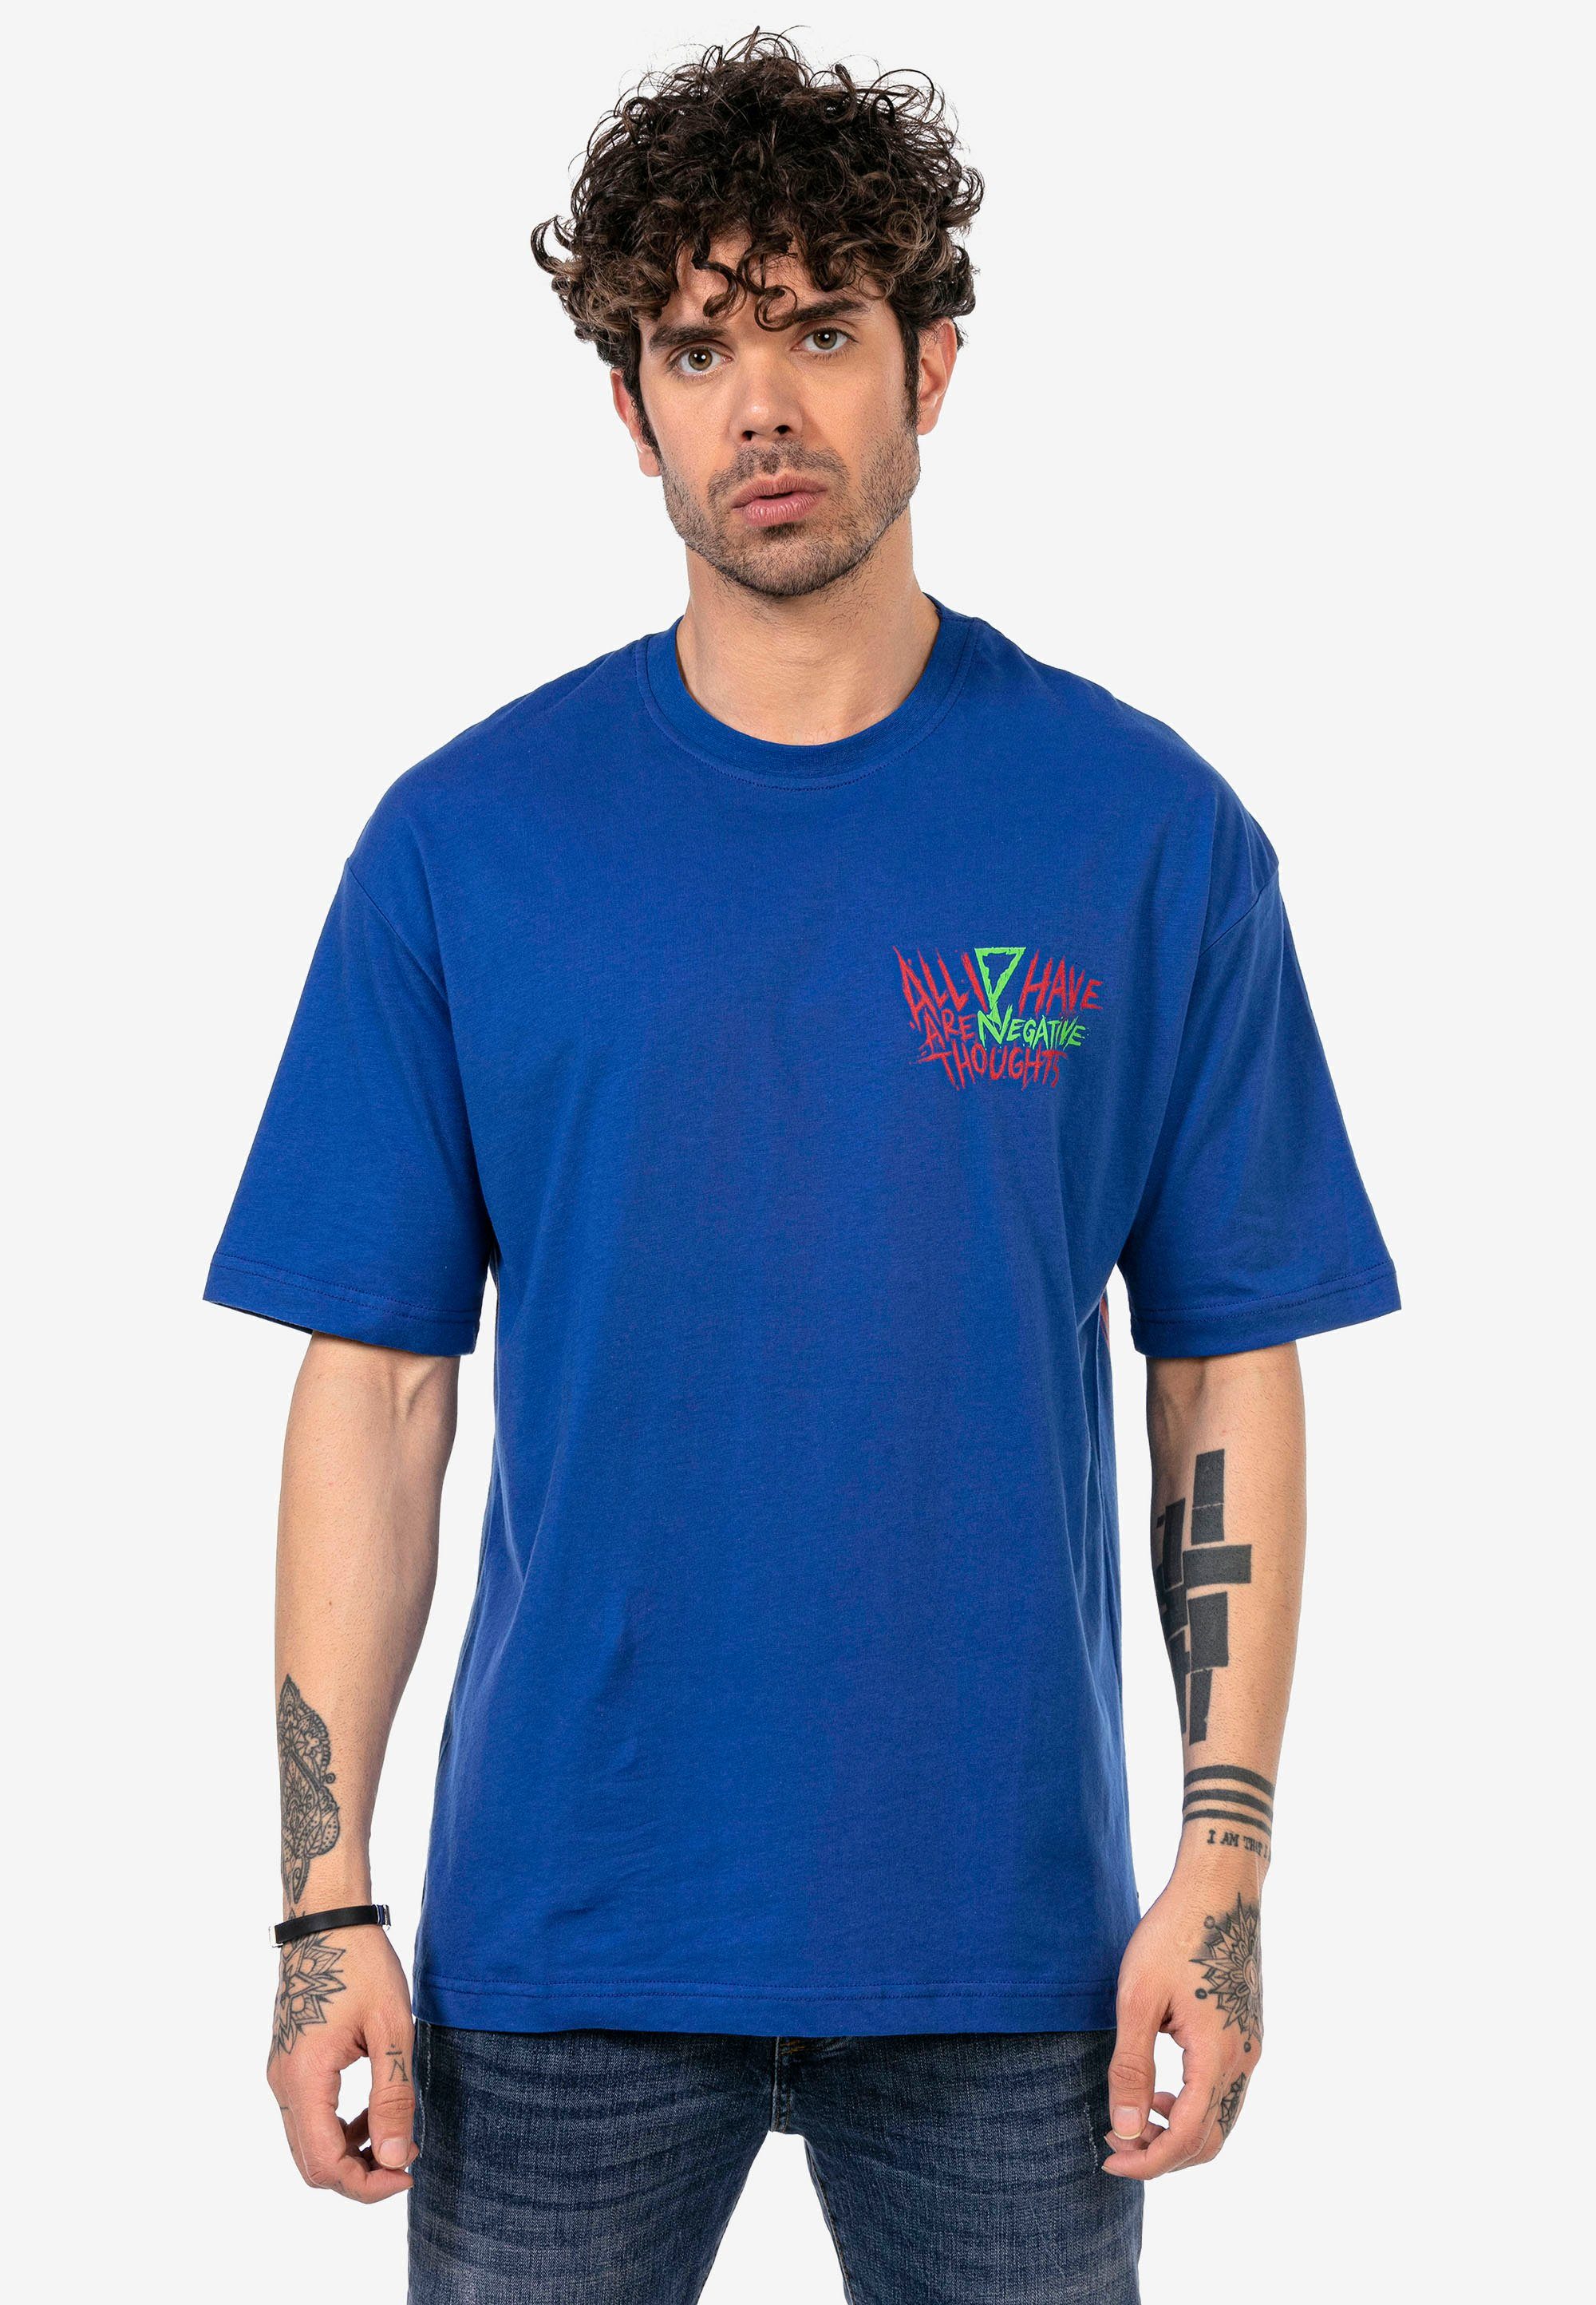 RedBridge T-Shirt Milton Keynes mit großem Joker-Motiv blau